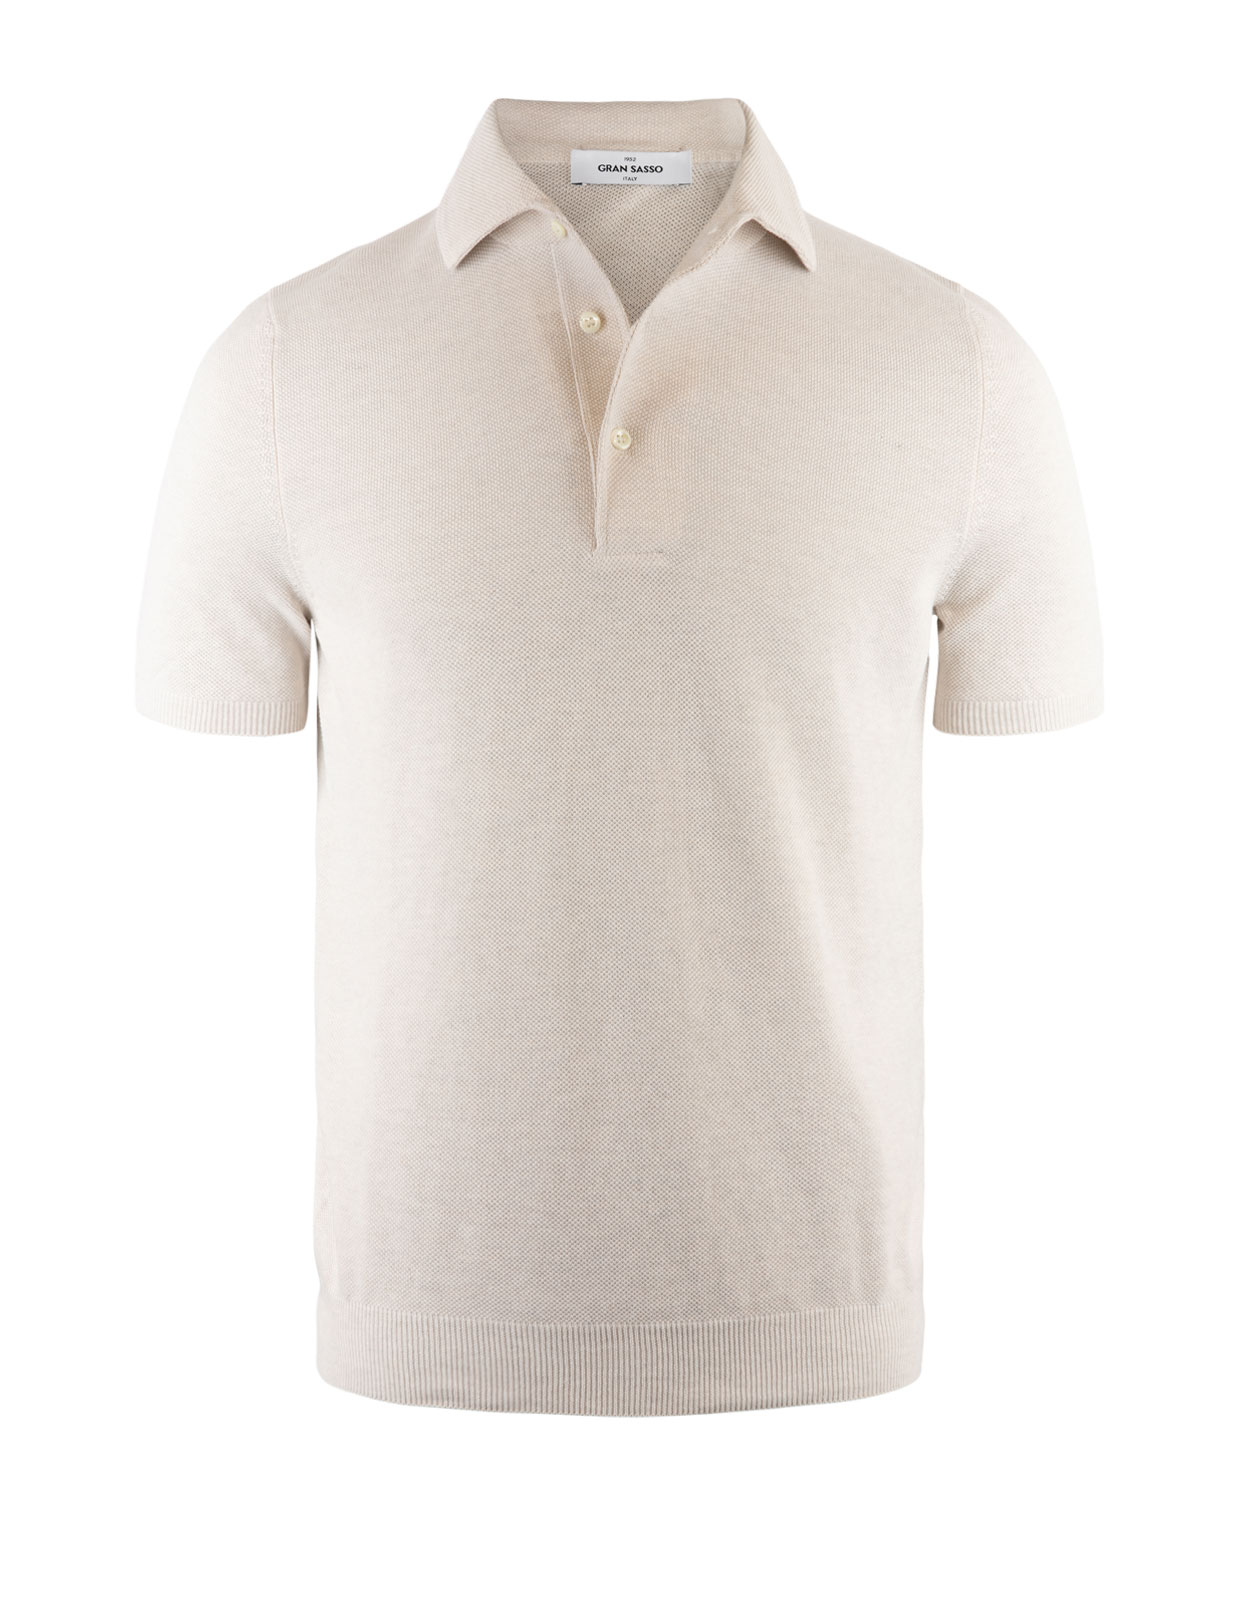 Fresh Cotton Polo Shirt Offwhite Stl 56